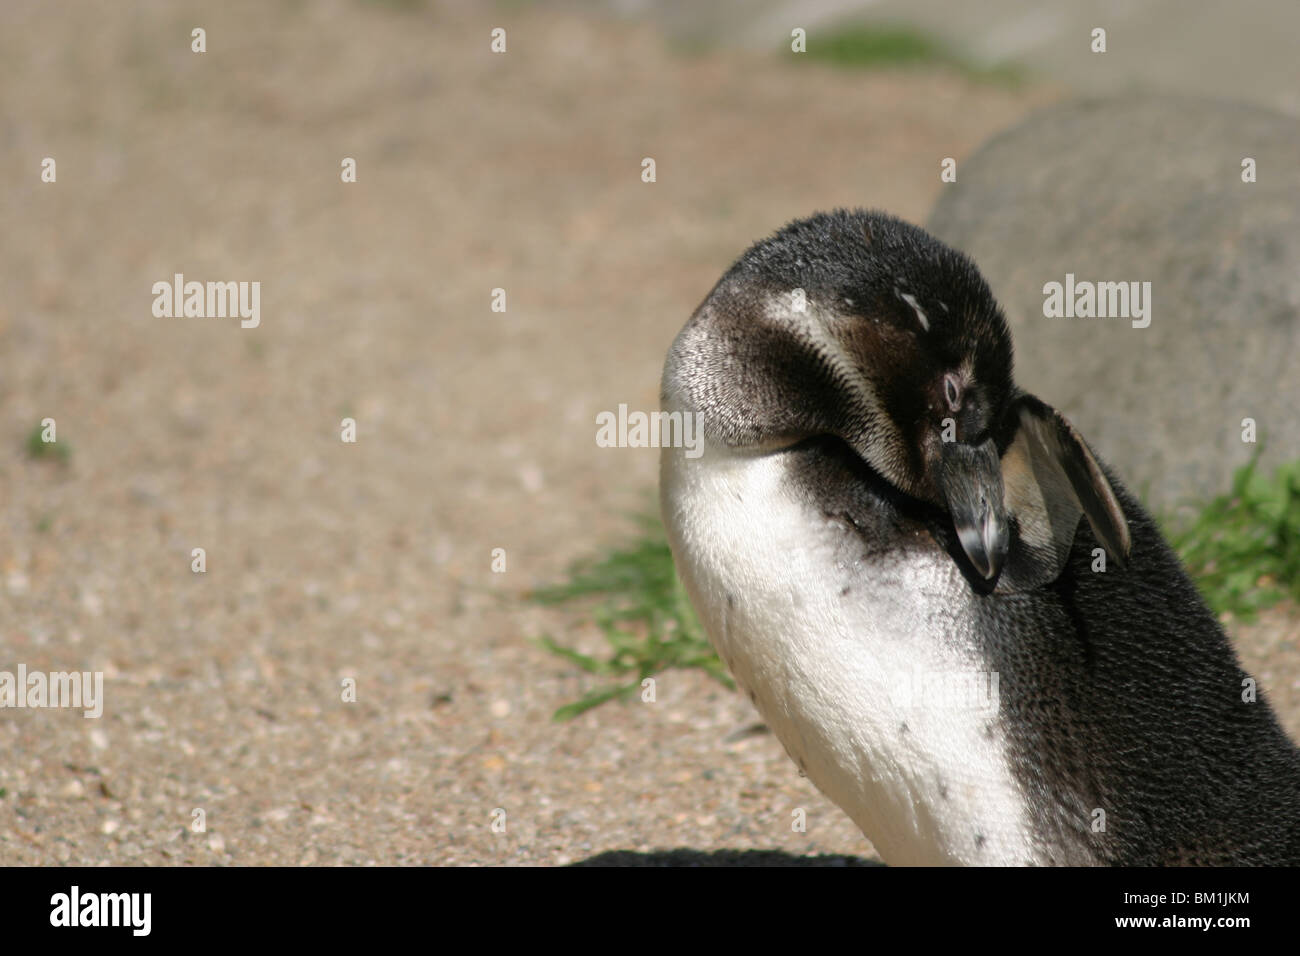 sich putzender Pinguin / cleaning penguin Stock Photo